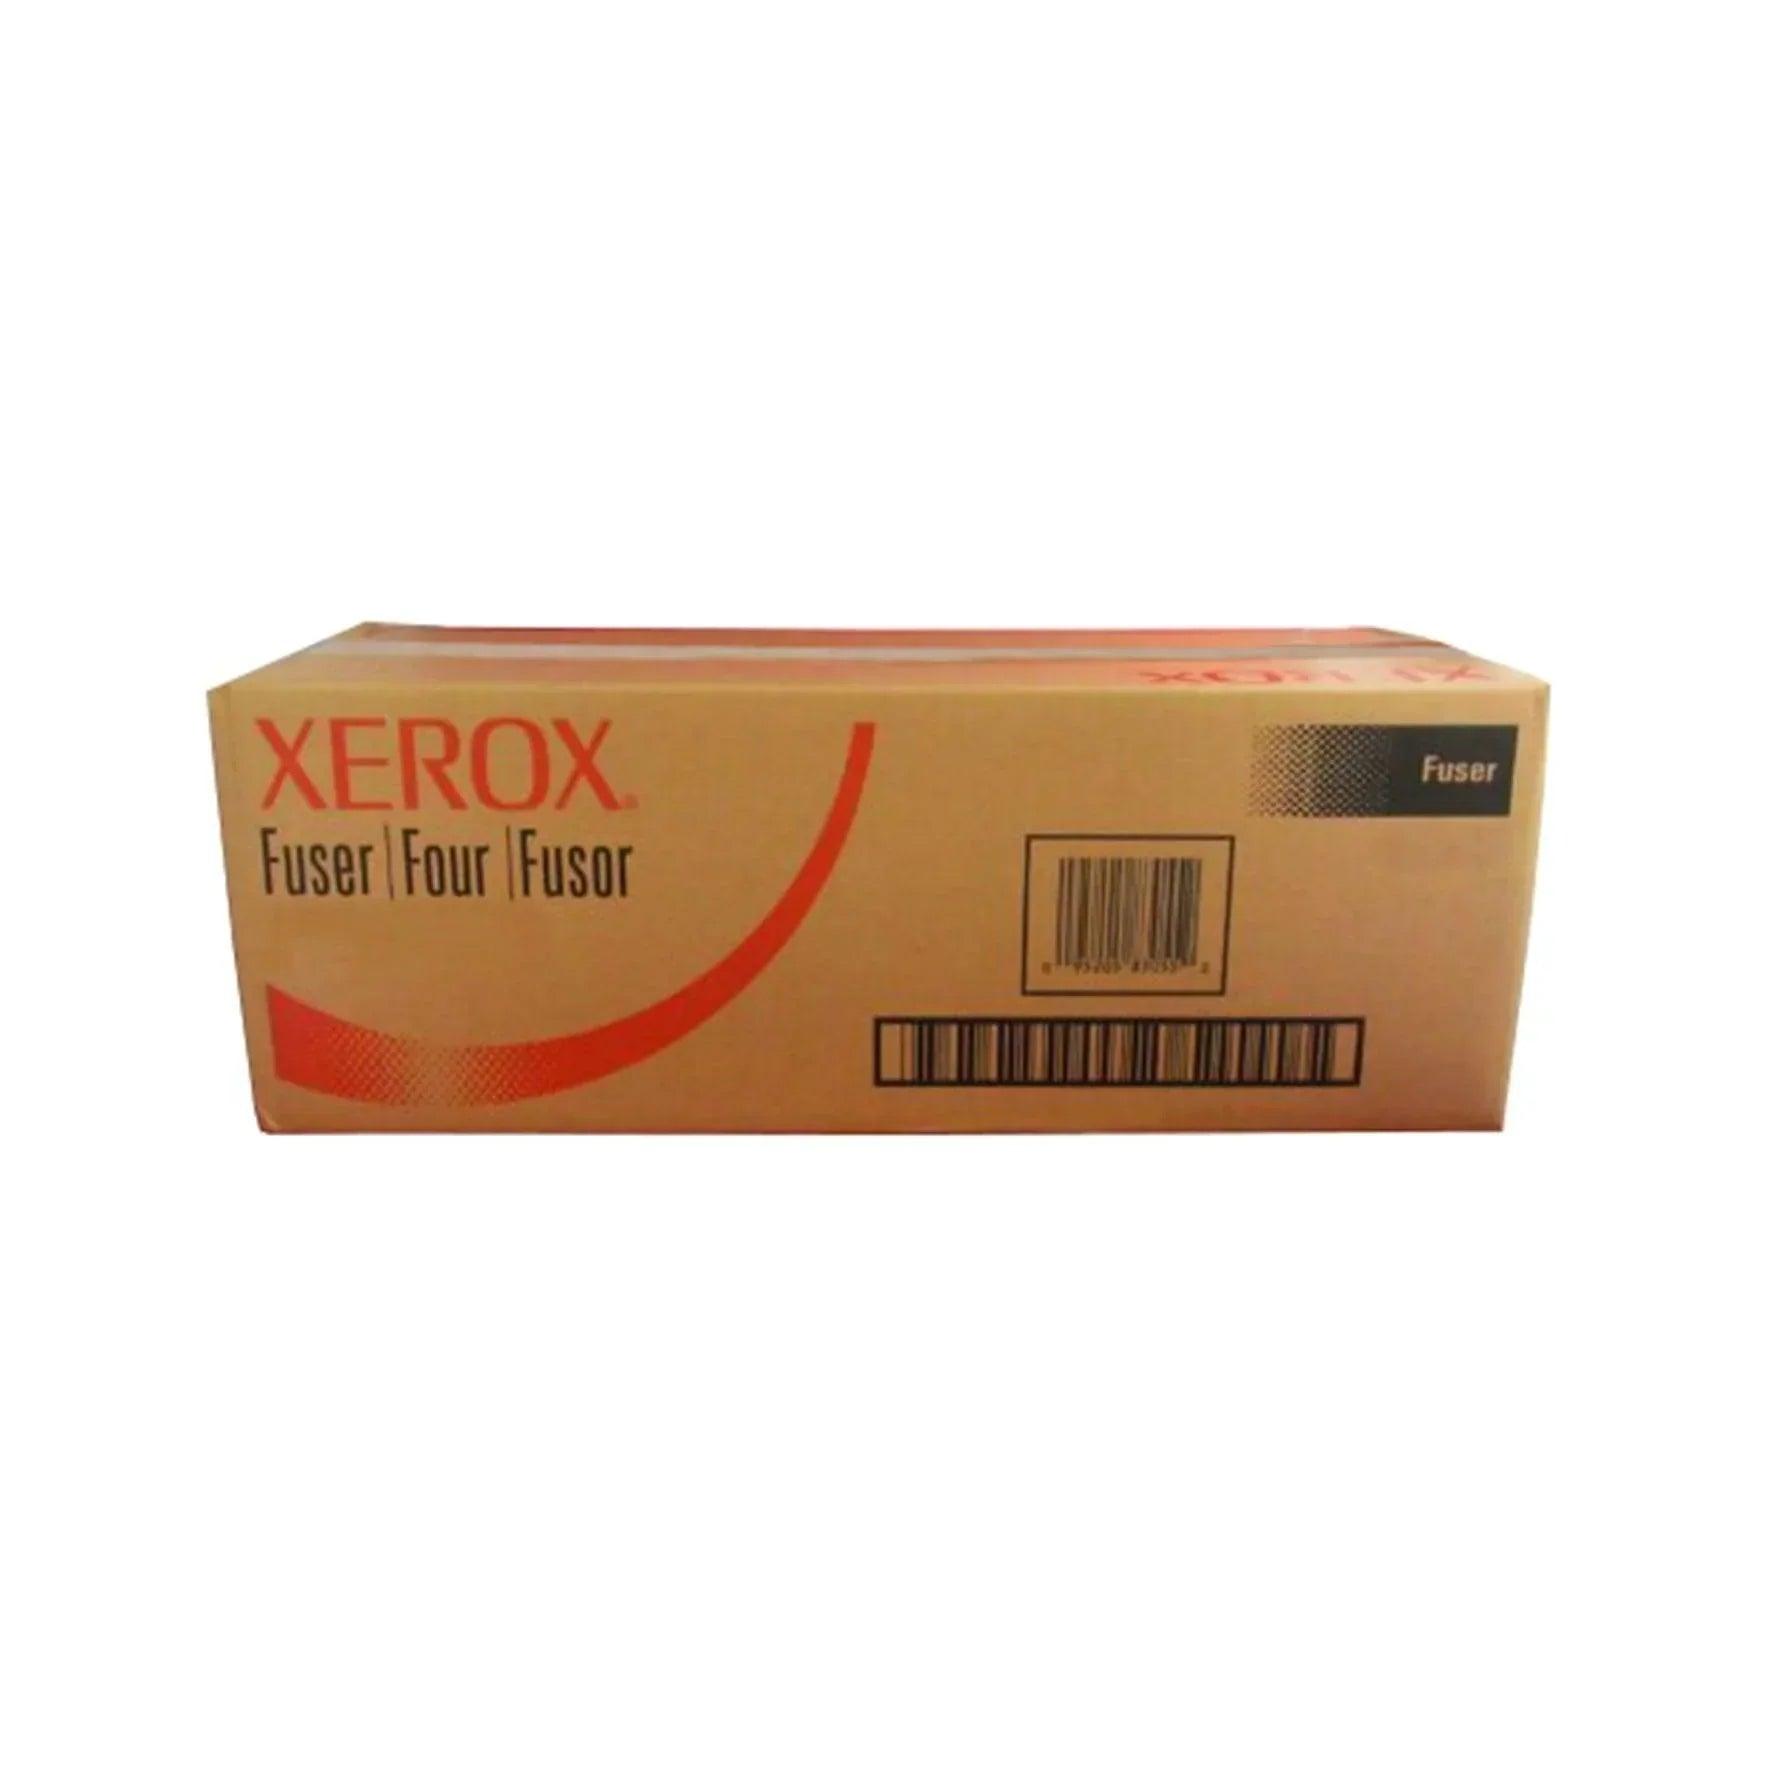 Fusor Xerox 330K 109R00847NO - Mega Market